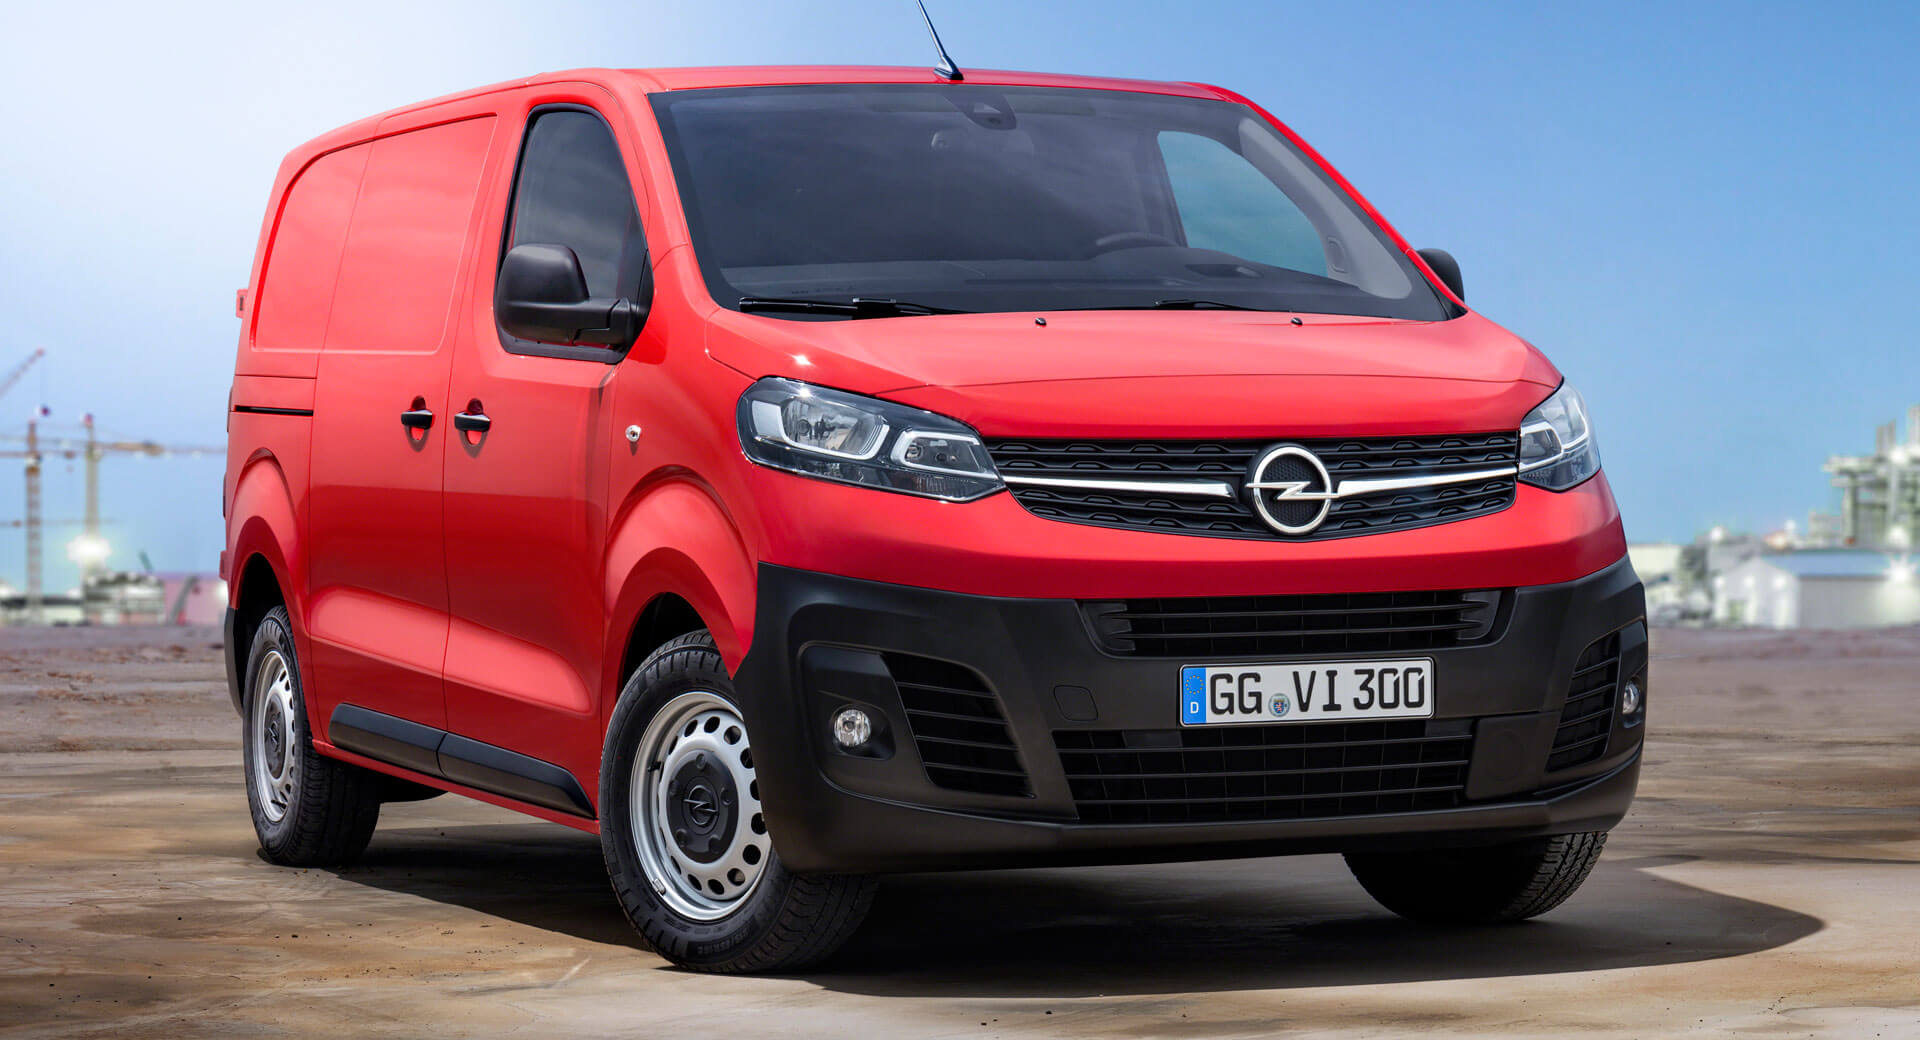 New Opel Vivaro Van Unveiled, Battery 